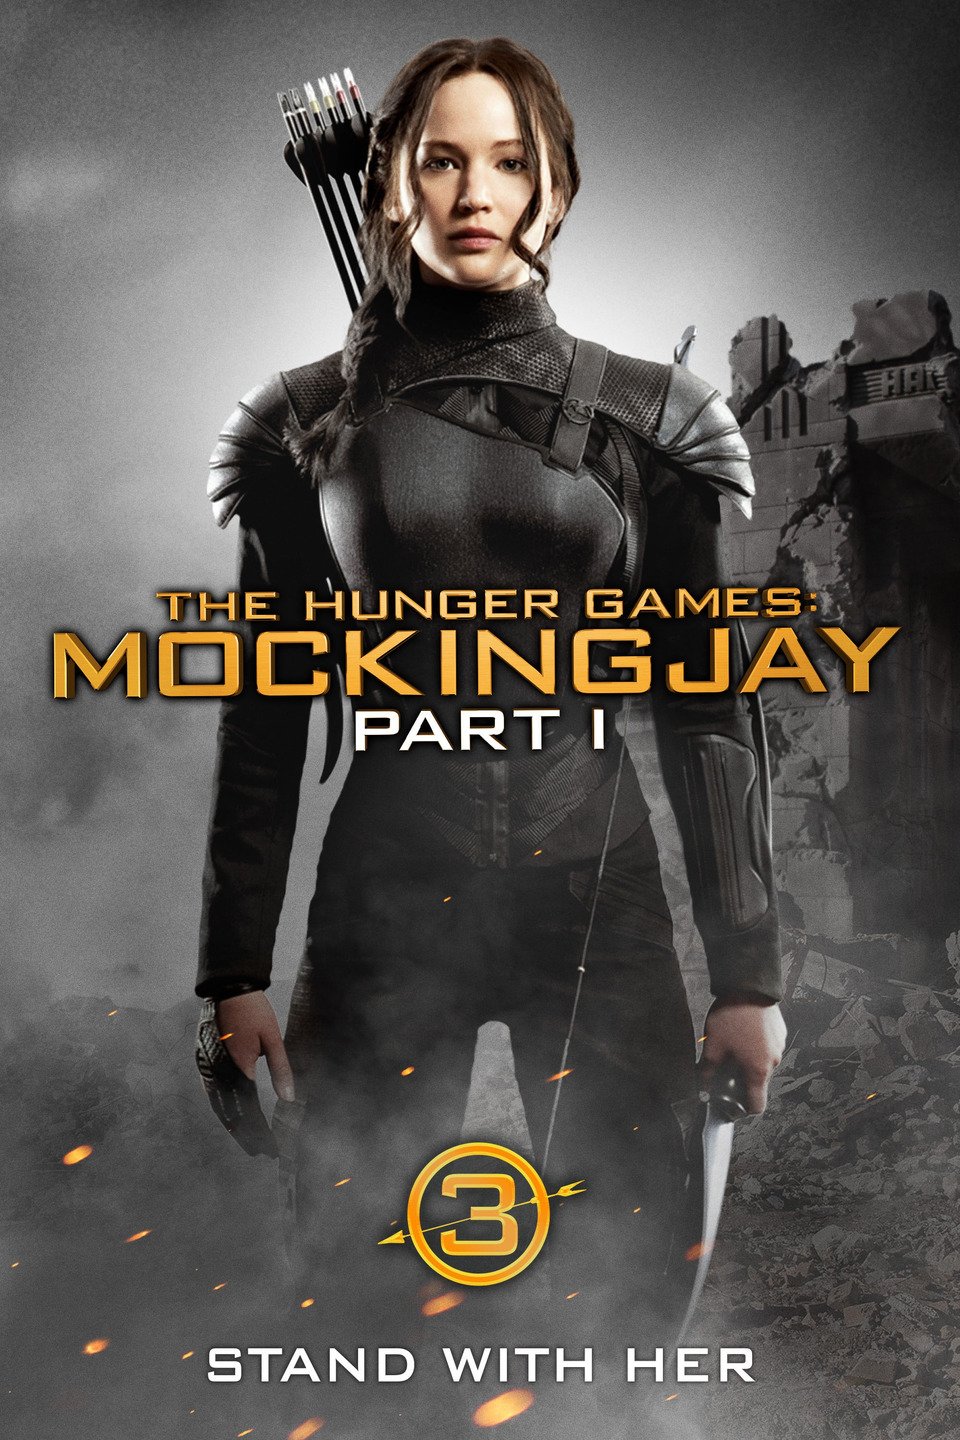 [MINI Super-HQ] The Hunger Games Mockingjay Part 1 (2014) เกมล่าเกม ม็อกกิ้งเจย์ ภาค 3 พาร์ท 1 [1080p] [พากย์ไทย DTS + เสียงอังกฤษ DTS] [บรรยายไทย + อังกฤษ] [เสียงไทย + ซับไทย] [OPENLOAD]